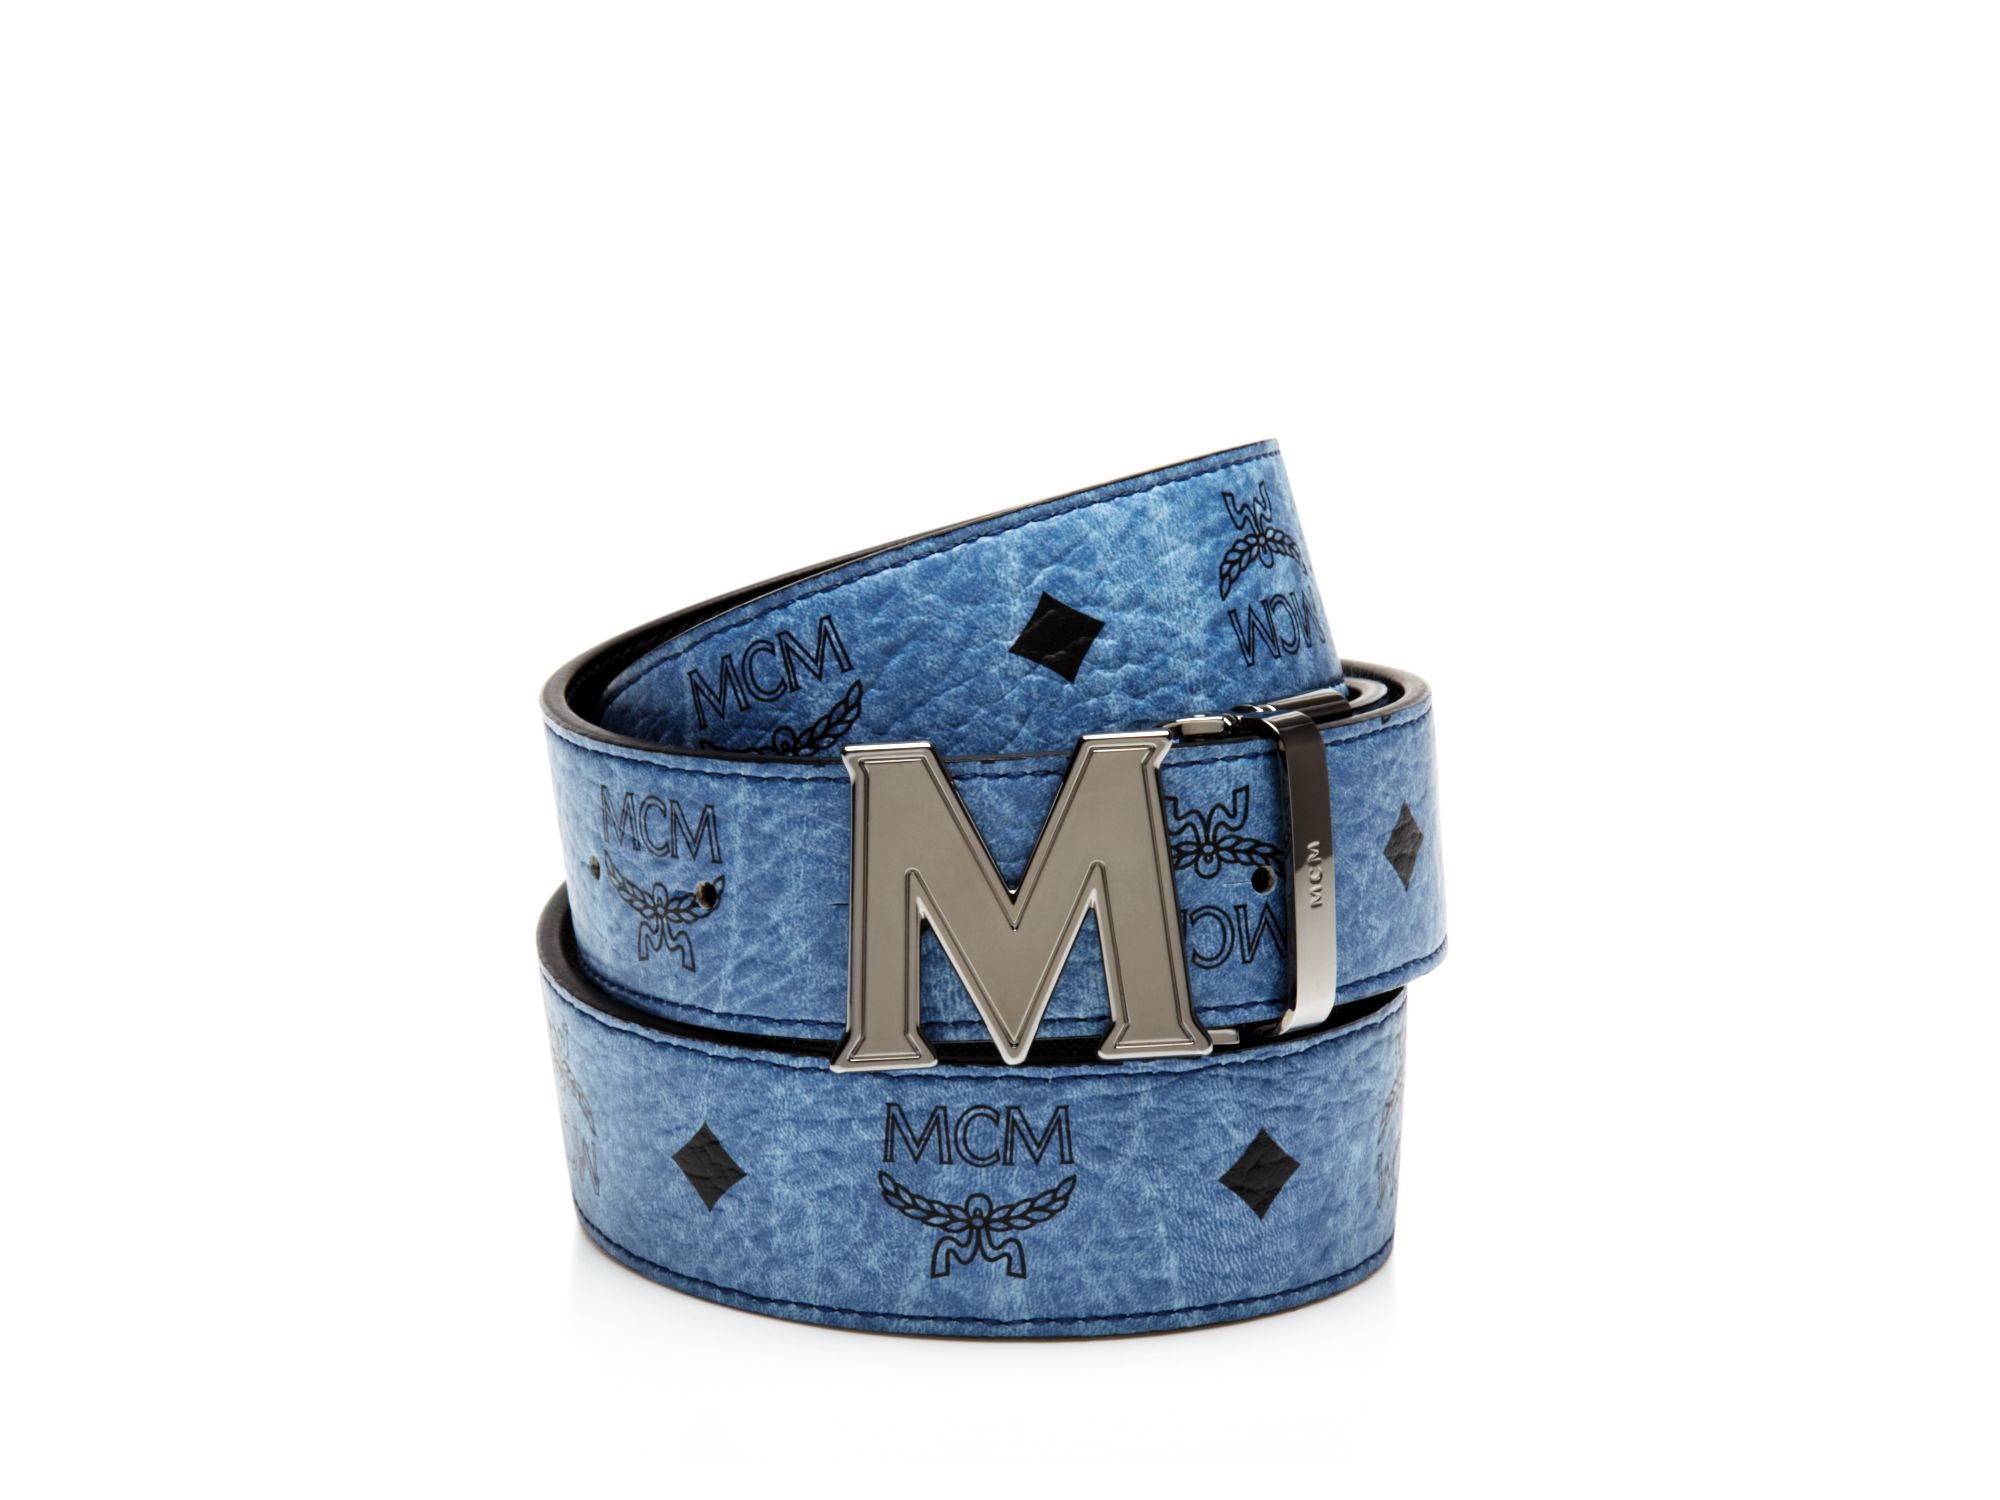 Lyst - Mcm Claus Reversible Belt in Blue for Men